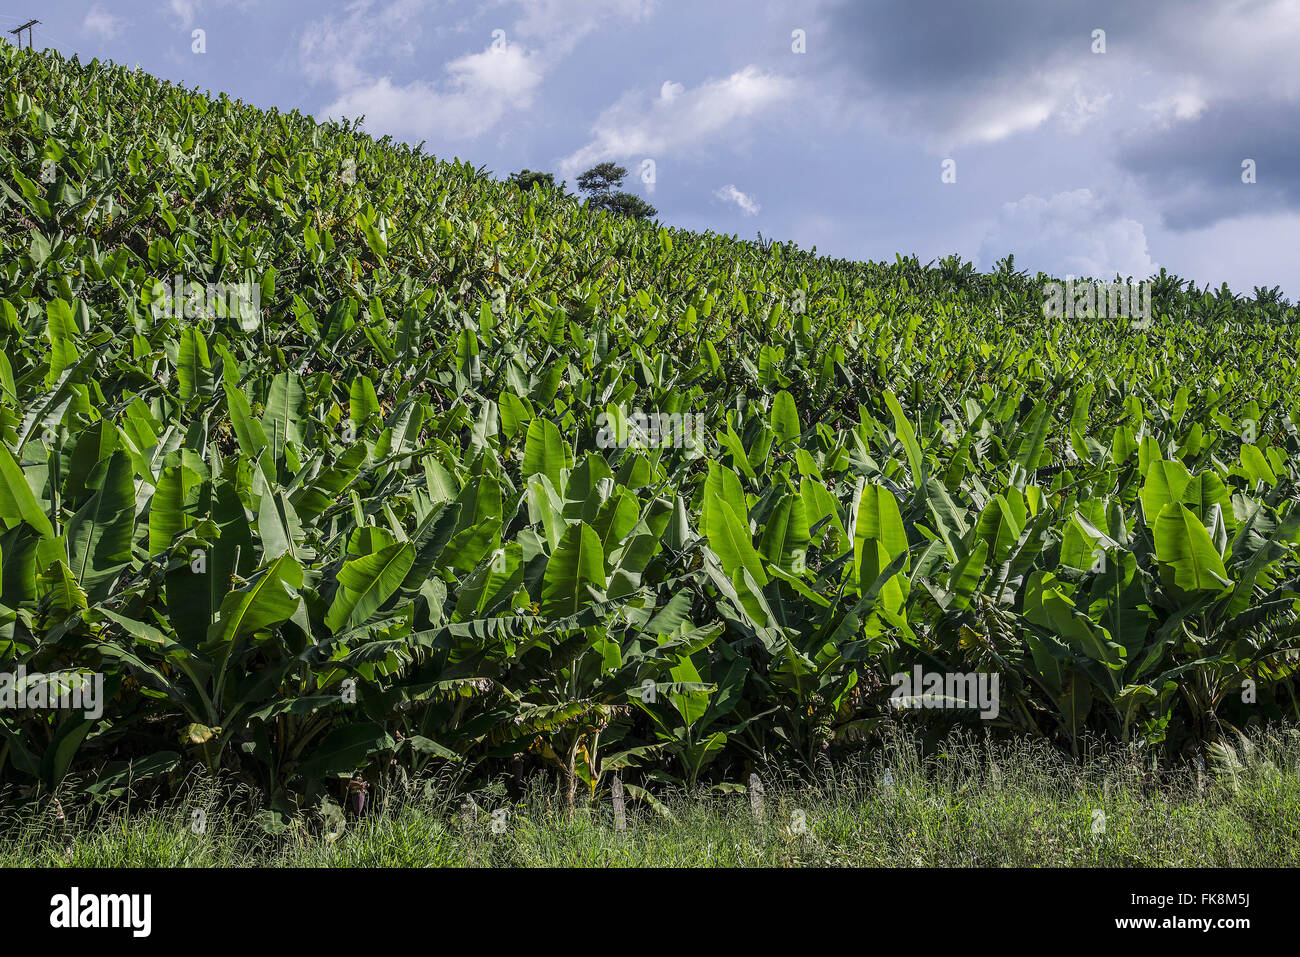 Banana plantation in rural area Stock Photo